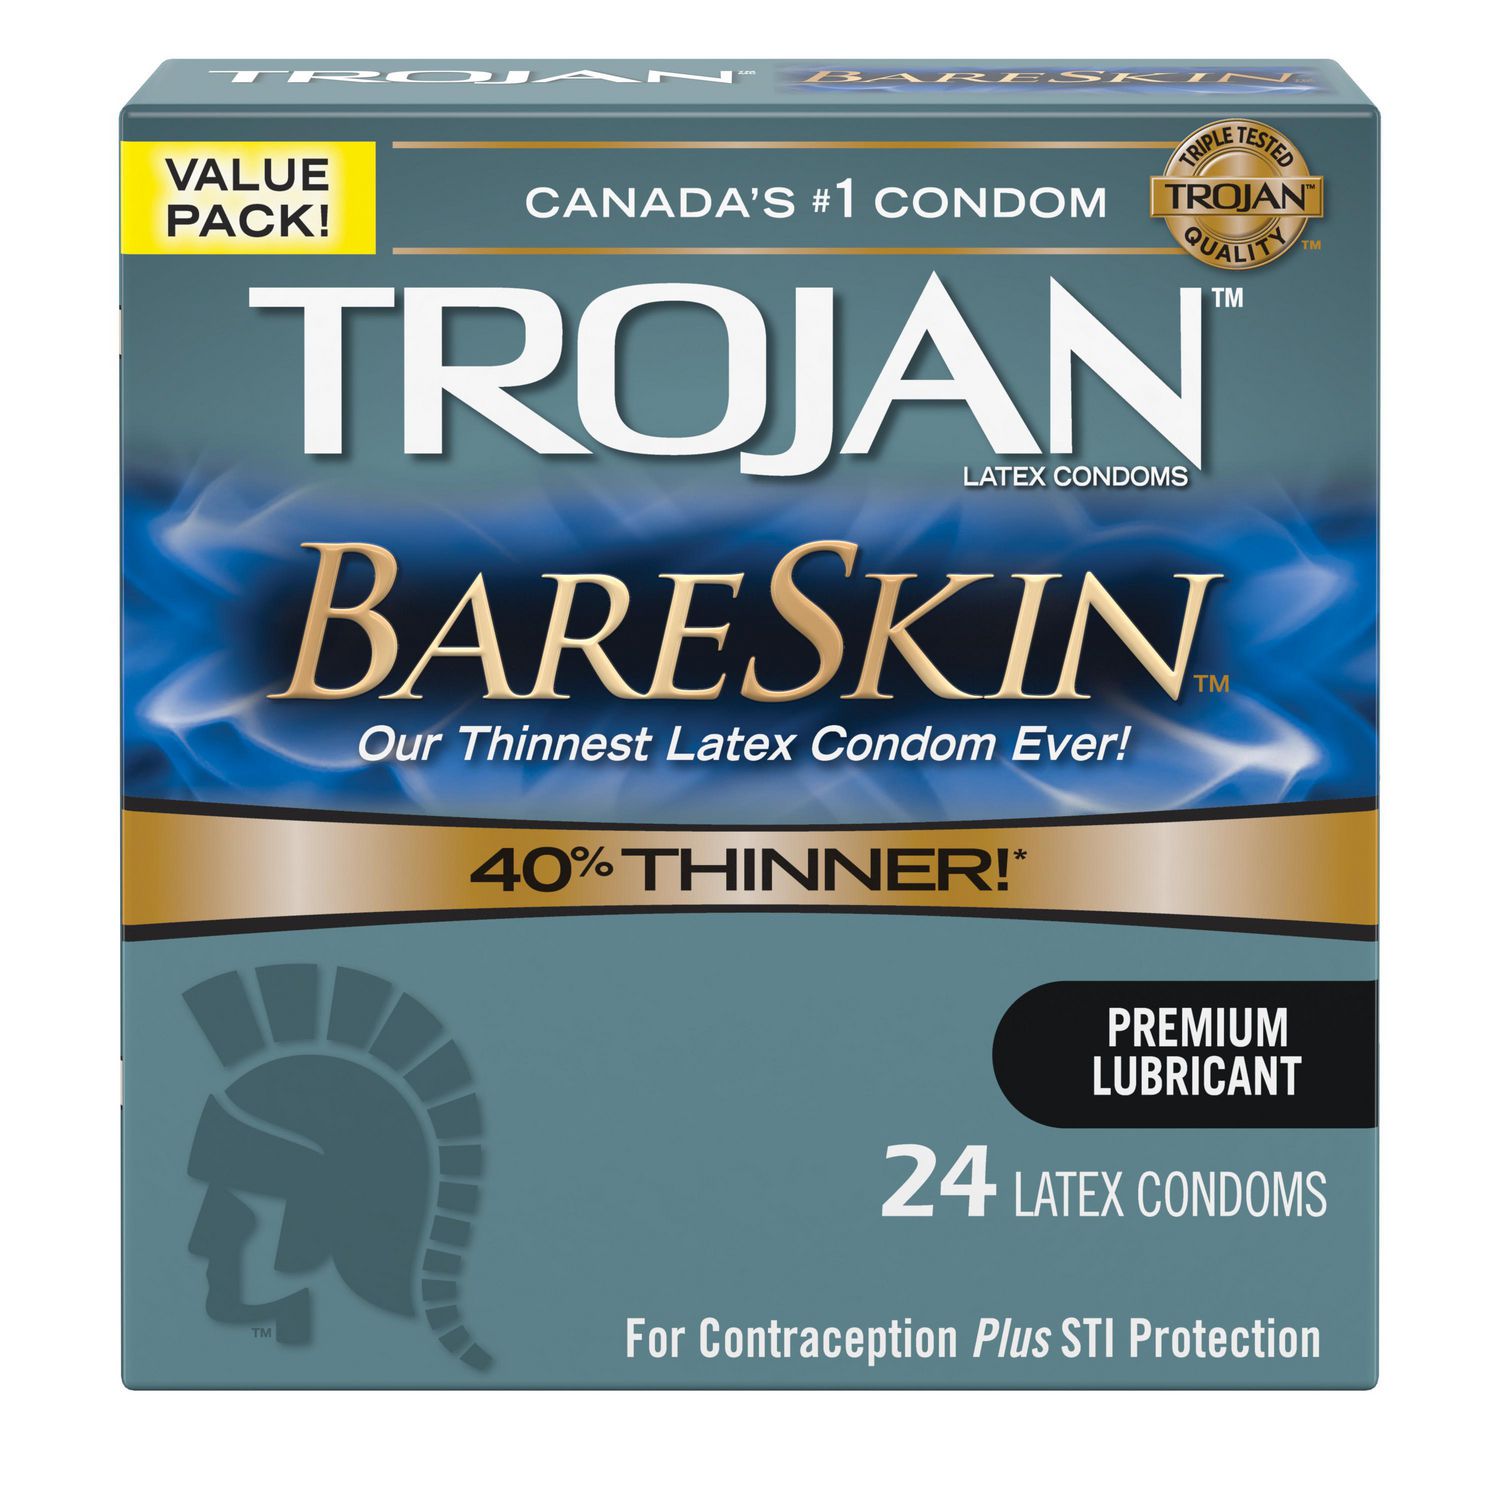 Trojan Bareskin Extra Thin Value Pack Condoms Walmart Canada 